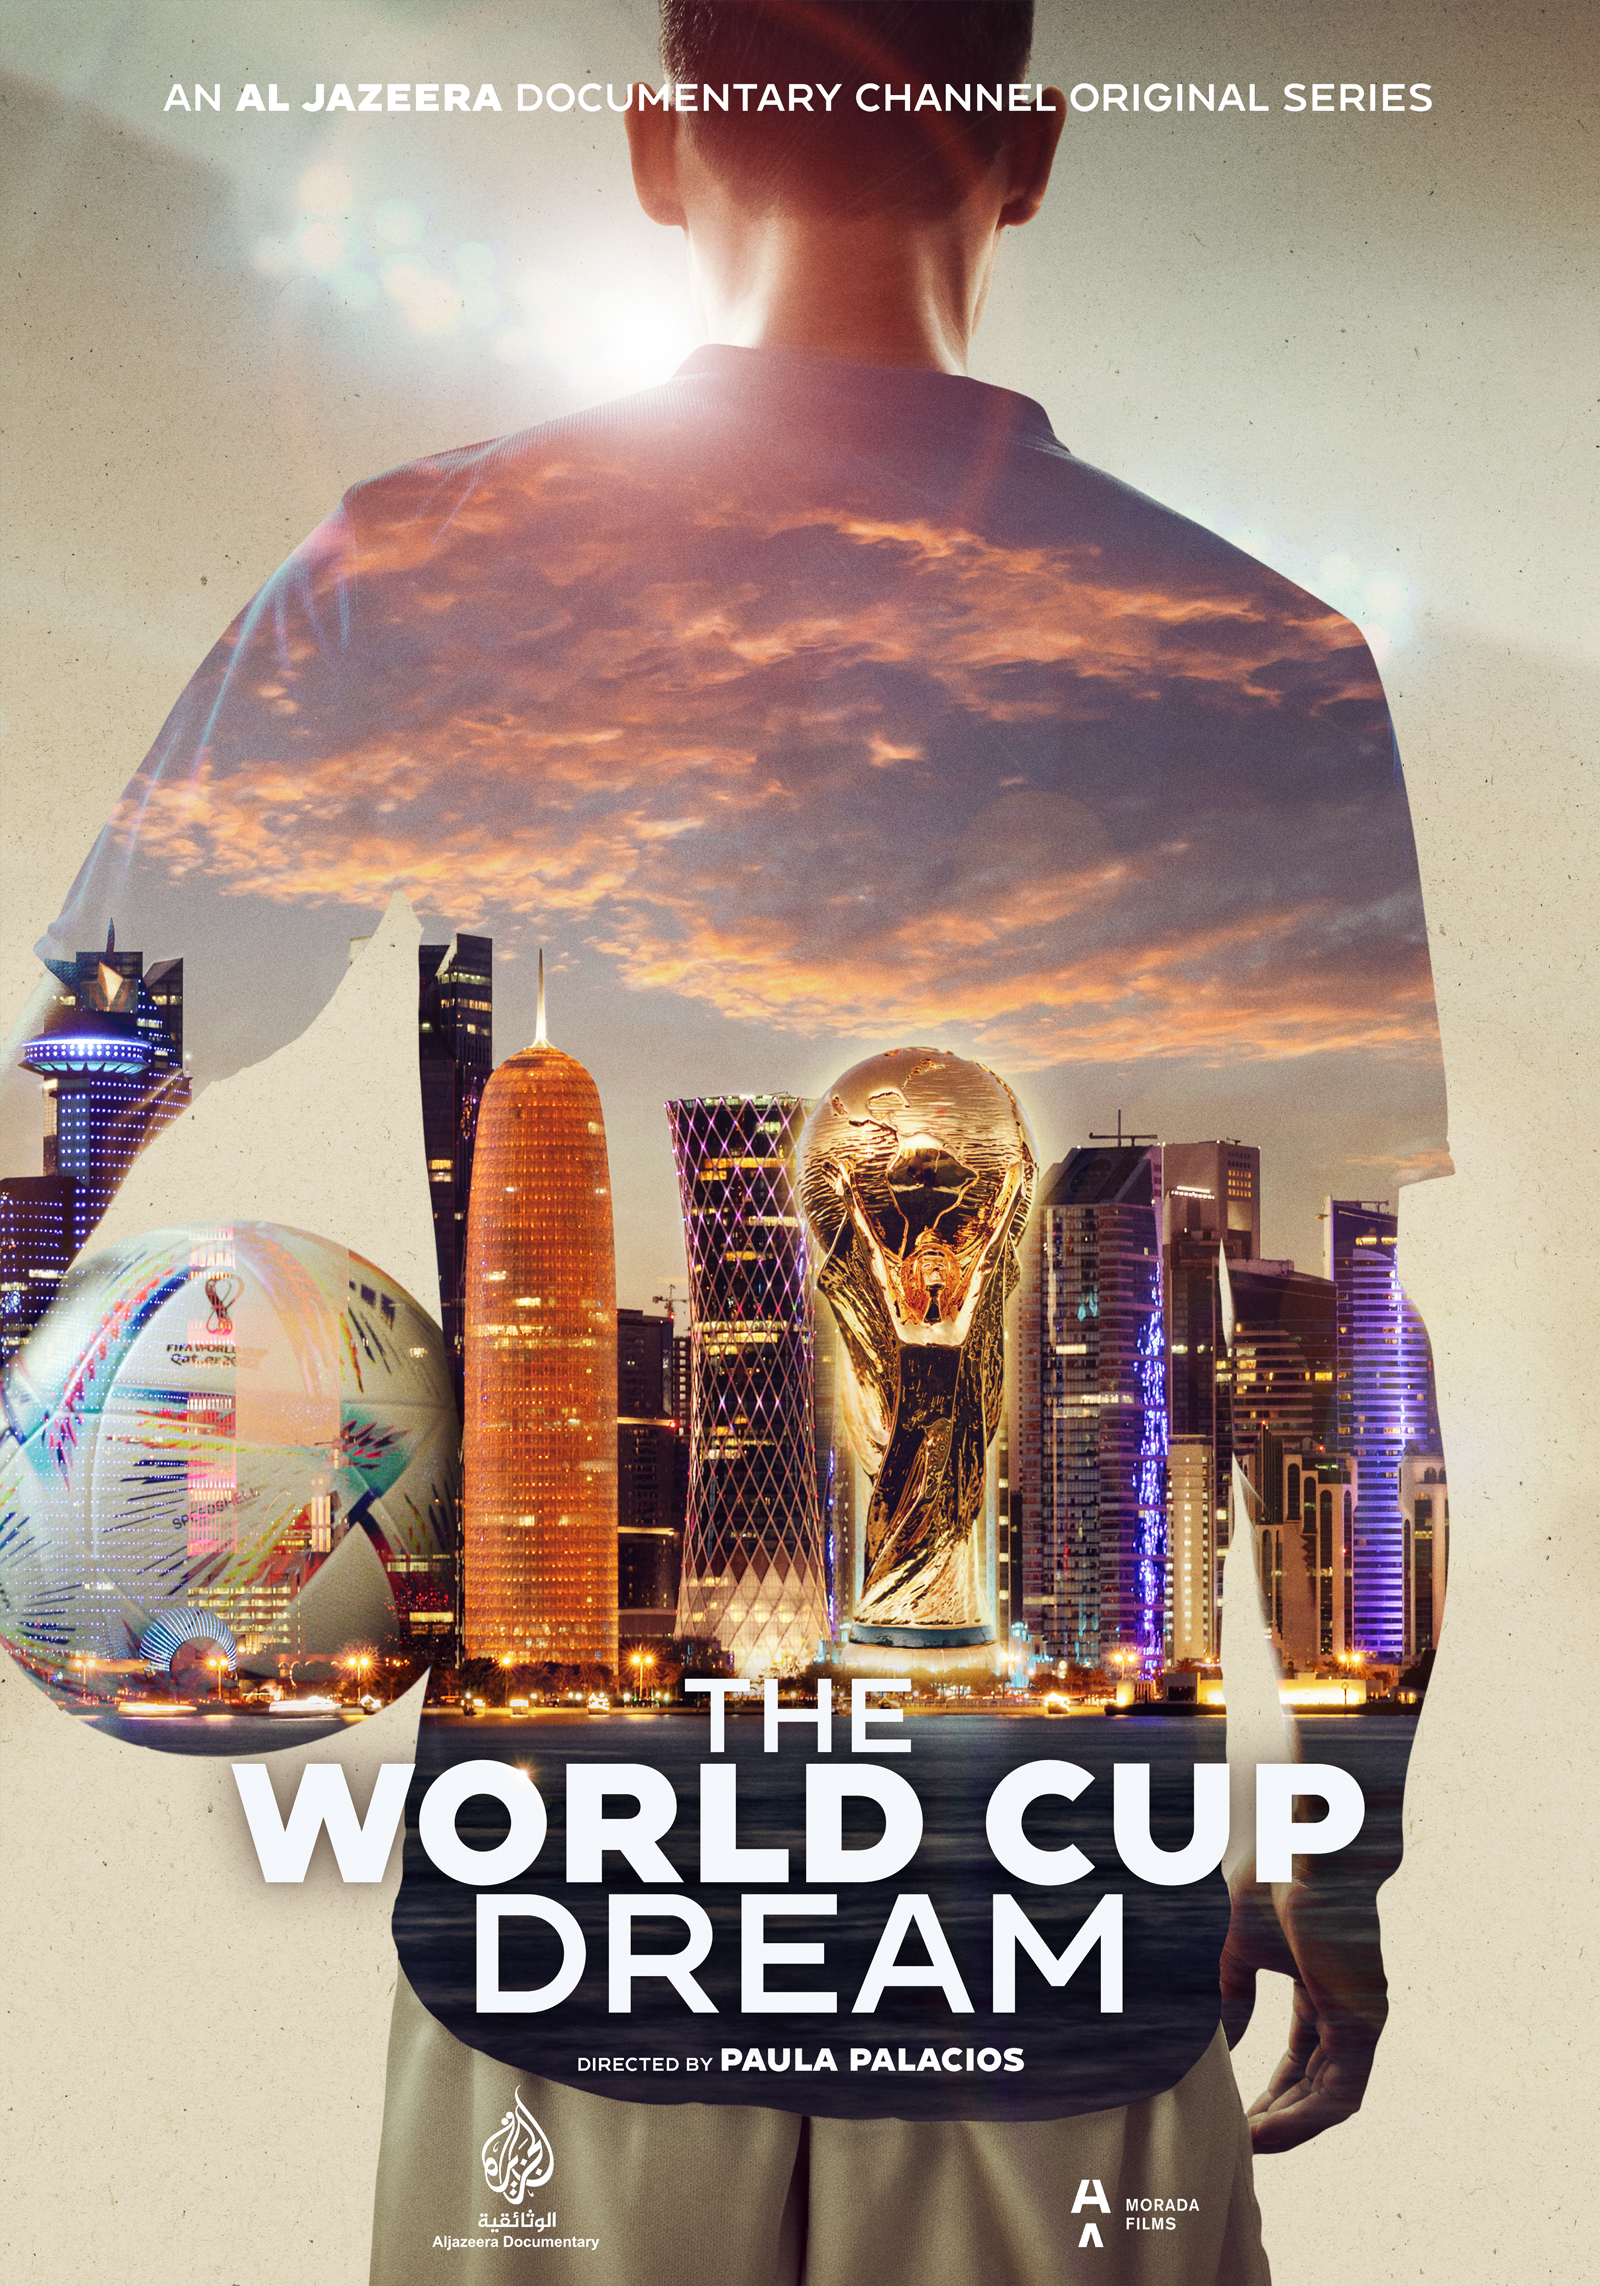 Pedro Cabañas - Design - THE WORLD CUP DREAM